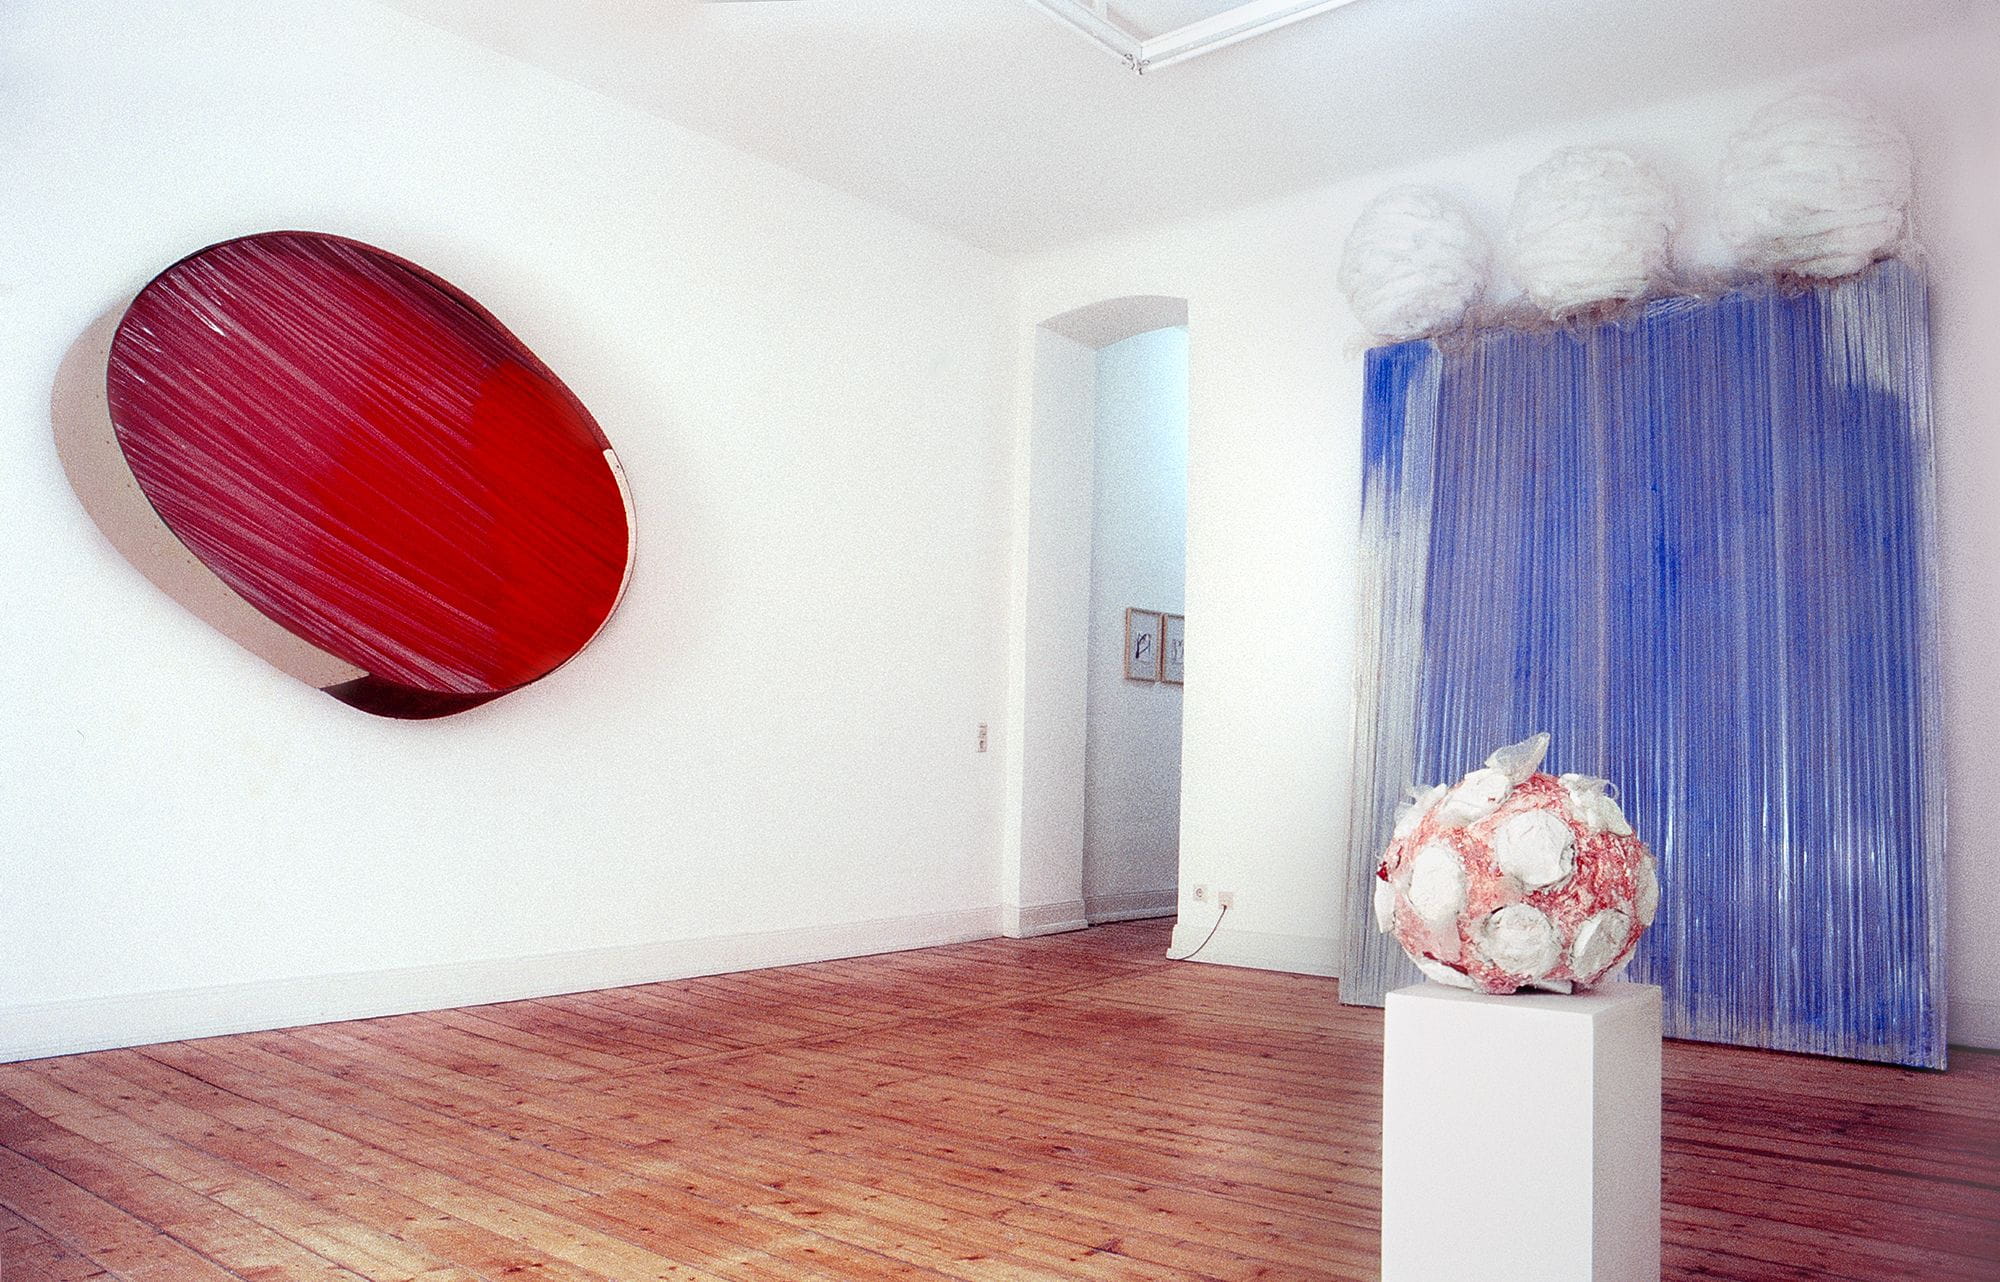 Wincenty Dunikowski-Duniko, Foil object at the exhibition in Cologne, Wanda Dunikowski Galerie, Germany, 1989